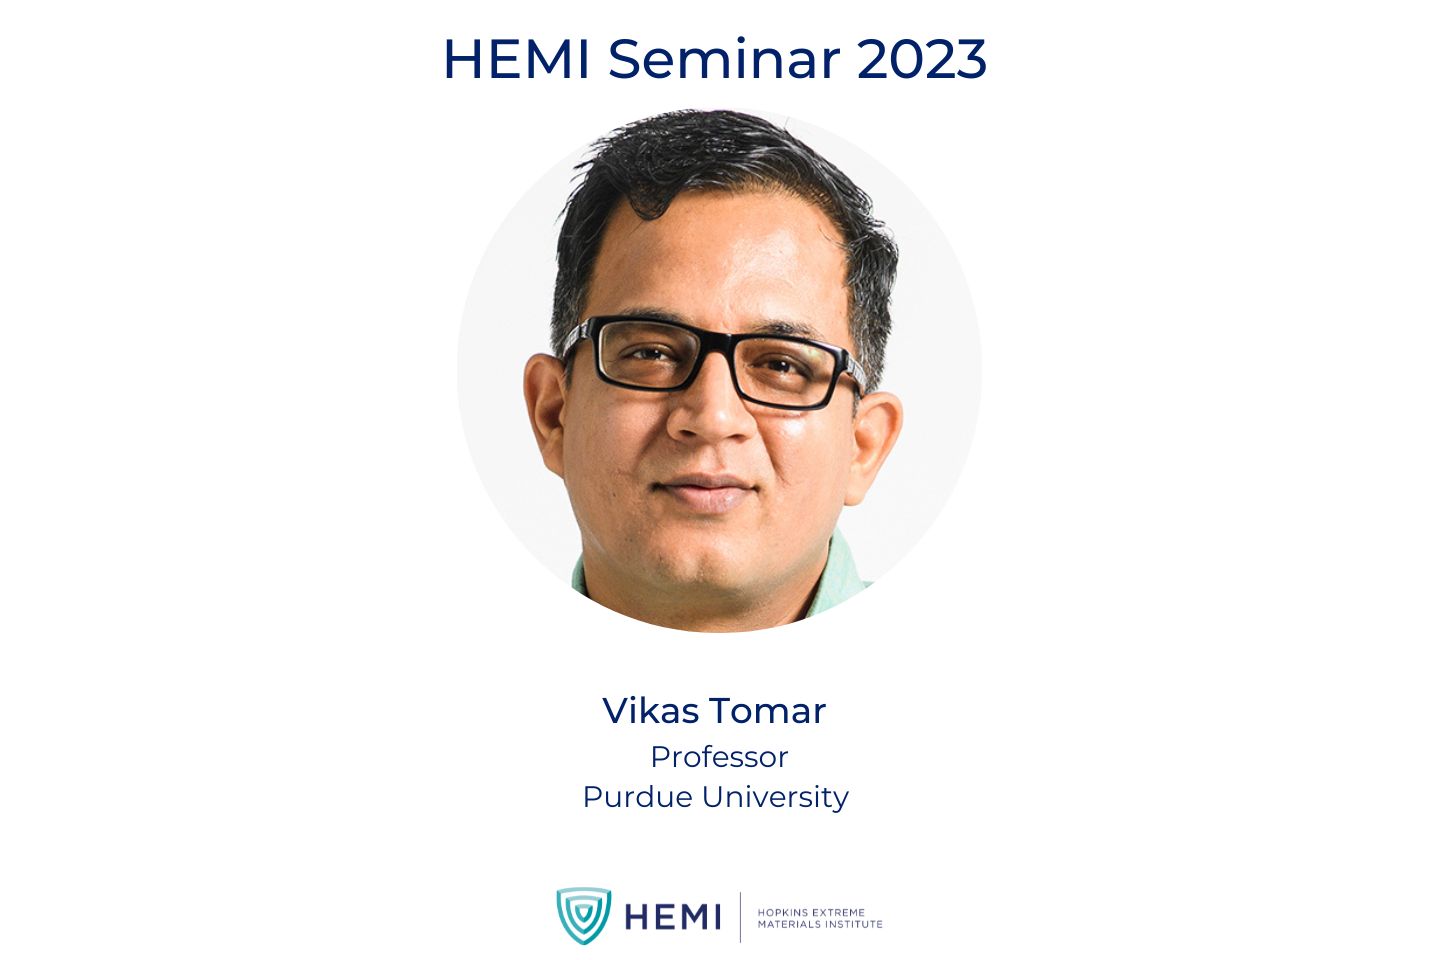 Vikas Tomar headshot and HEMI logo with text: "HEMI Seminar 2023, Vikas Tomar, Professor, Purdue University"